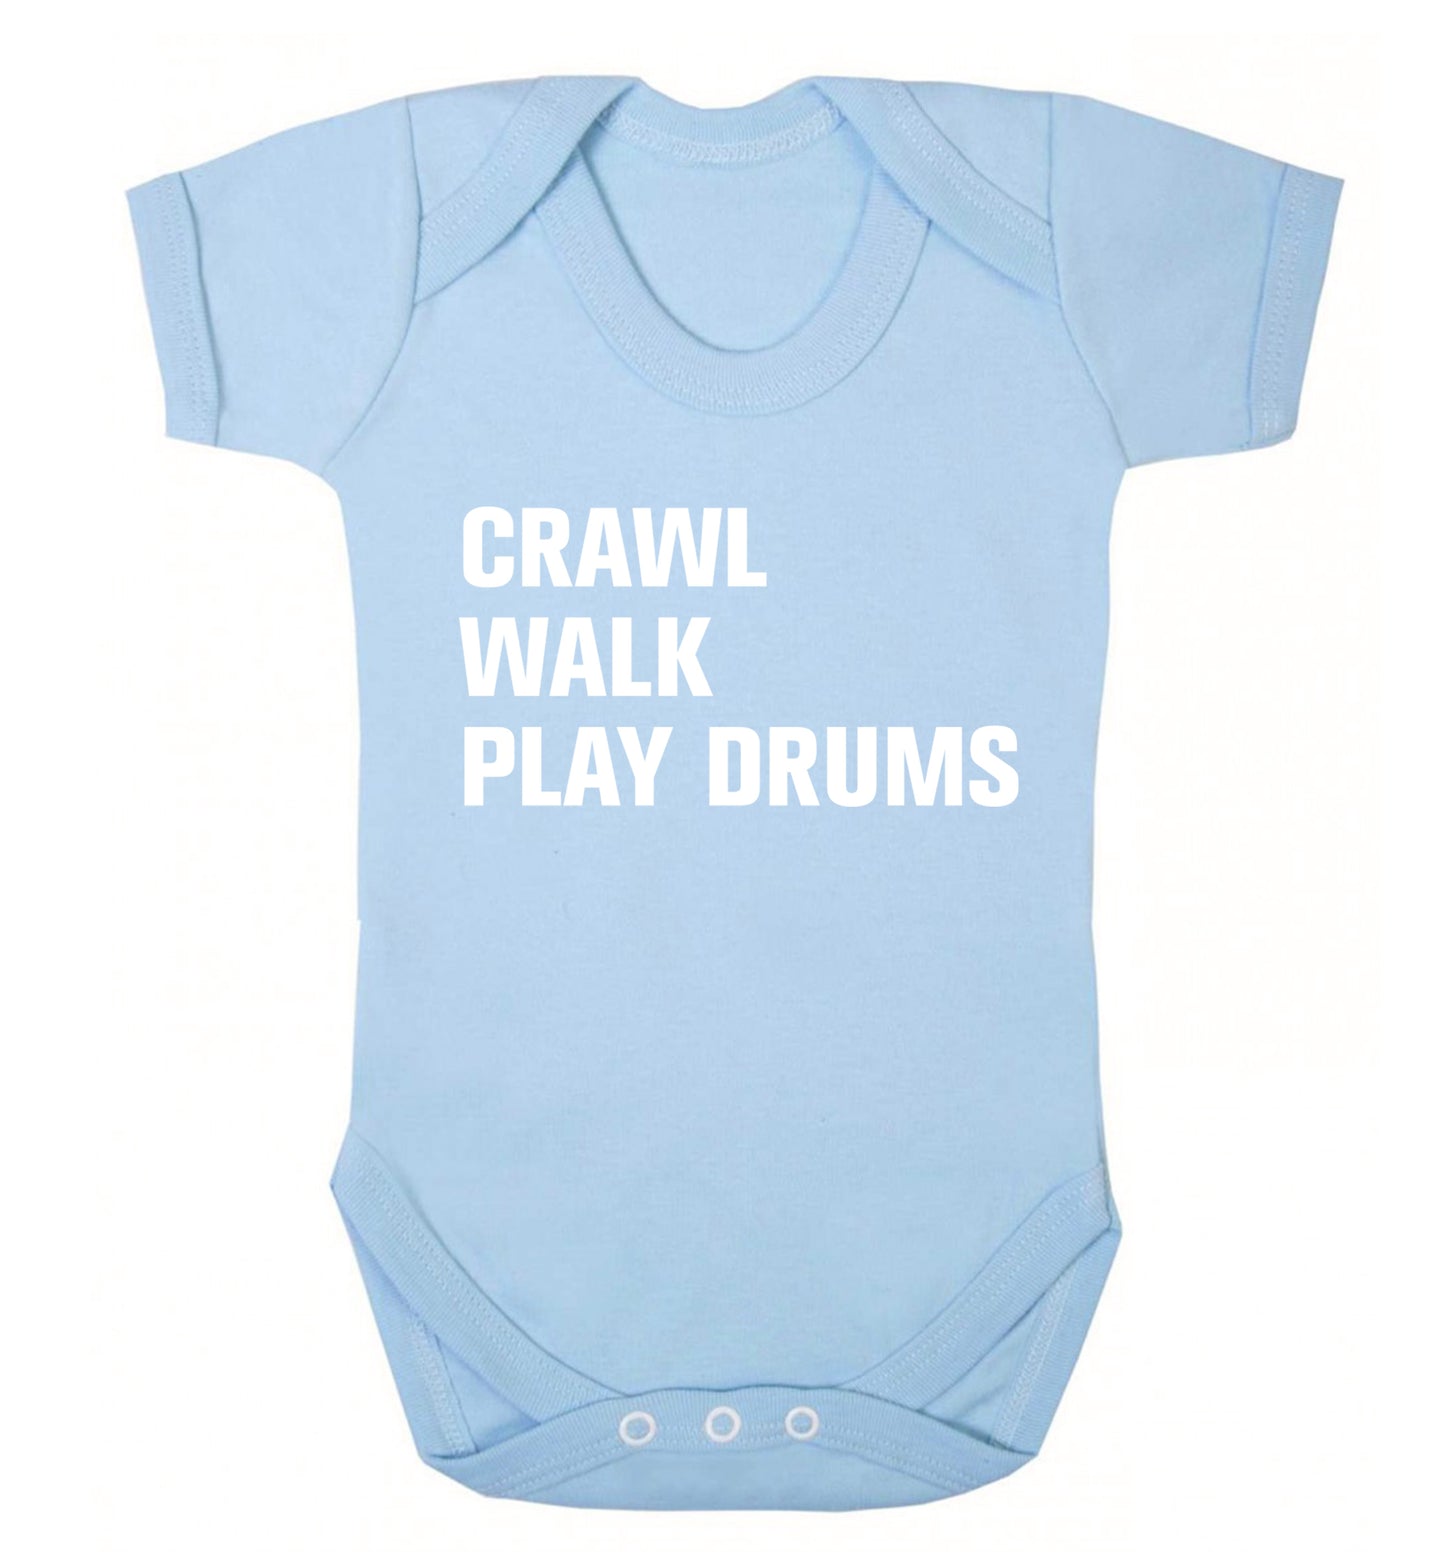 Crawl walk play drums Baby Vest pale blue 18-24 months